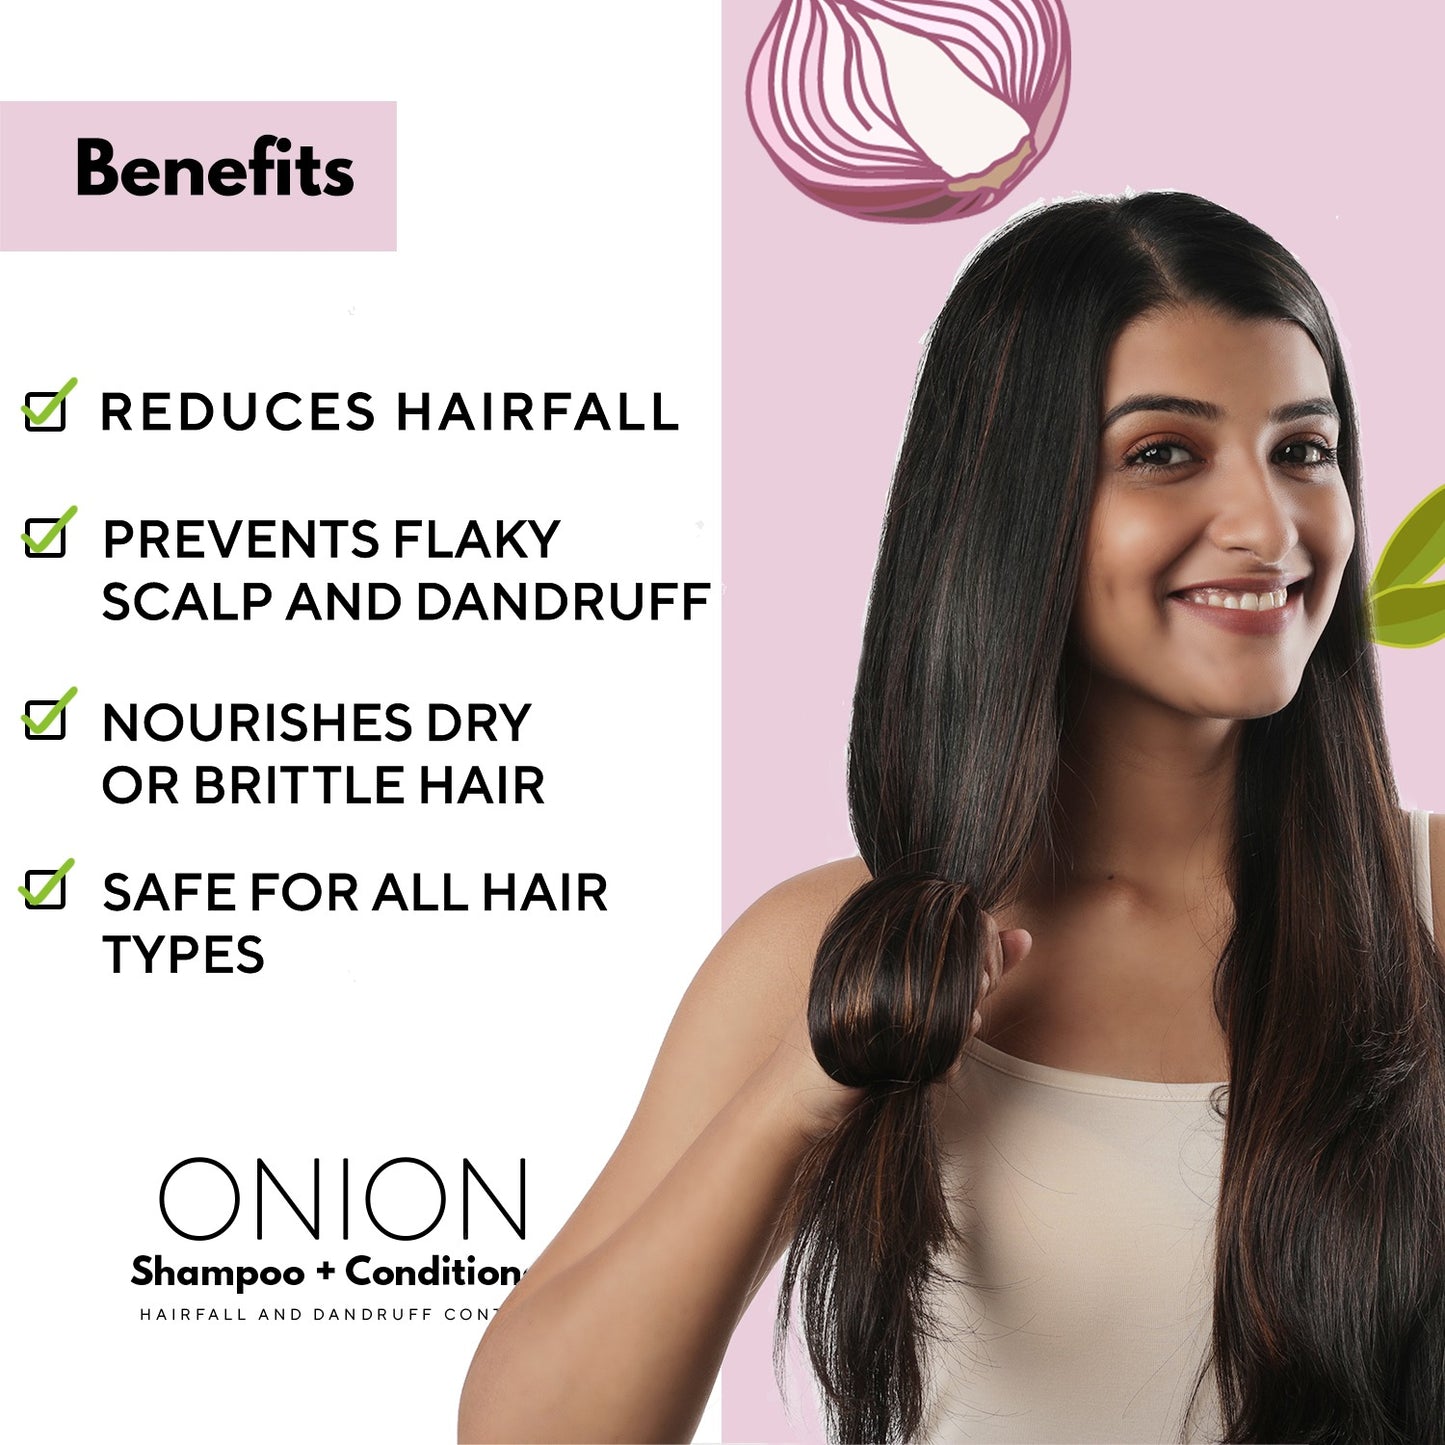 Alphavedic Hair Fall Control Onion Shampoo + Conditioner (300ml)